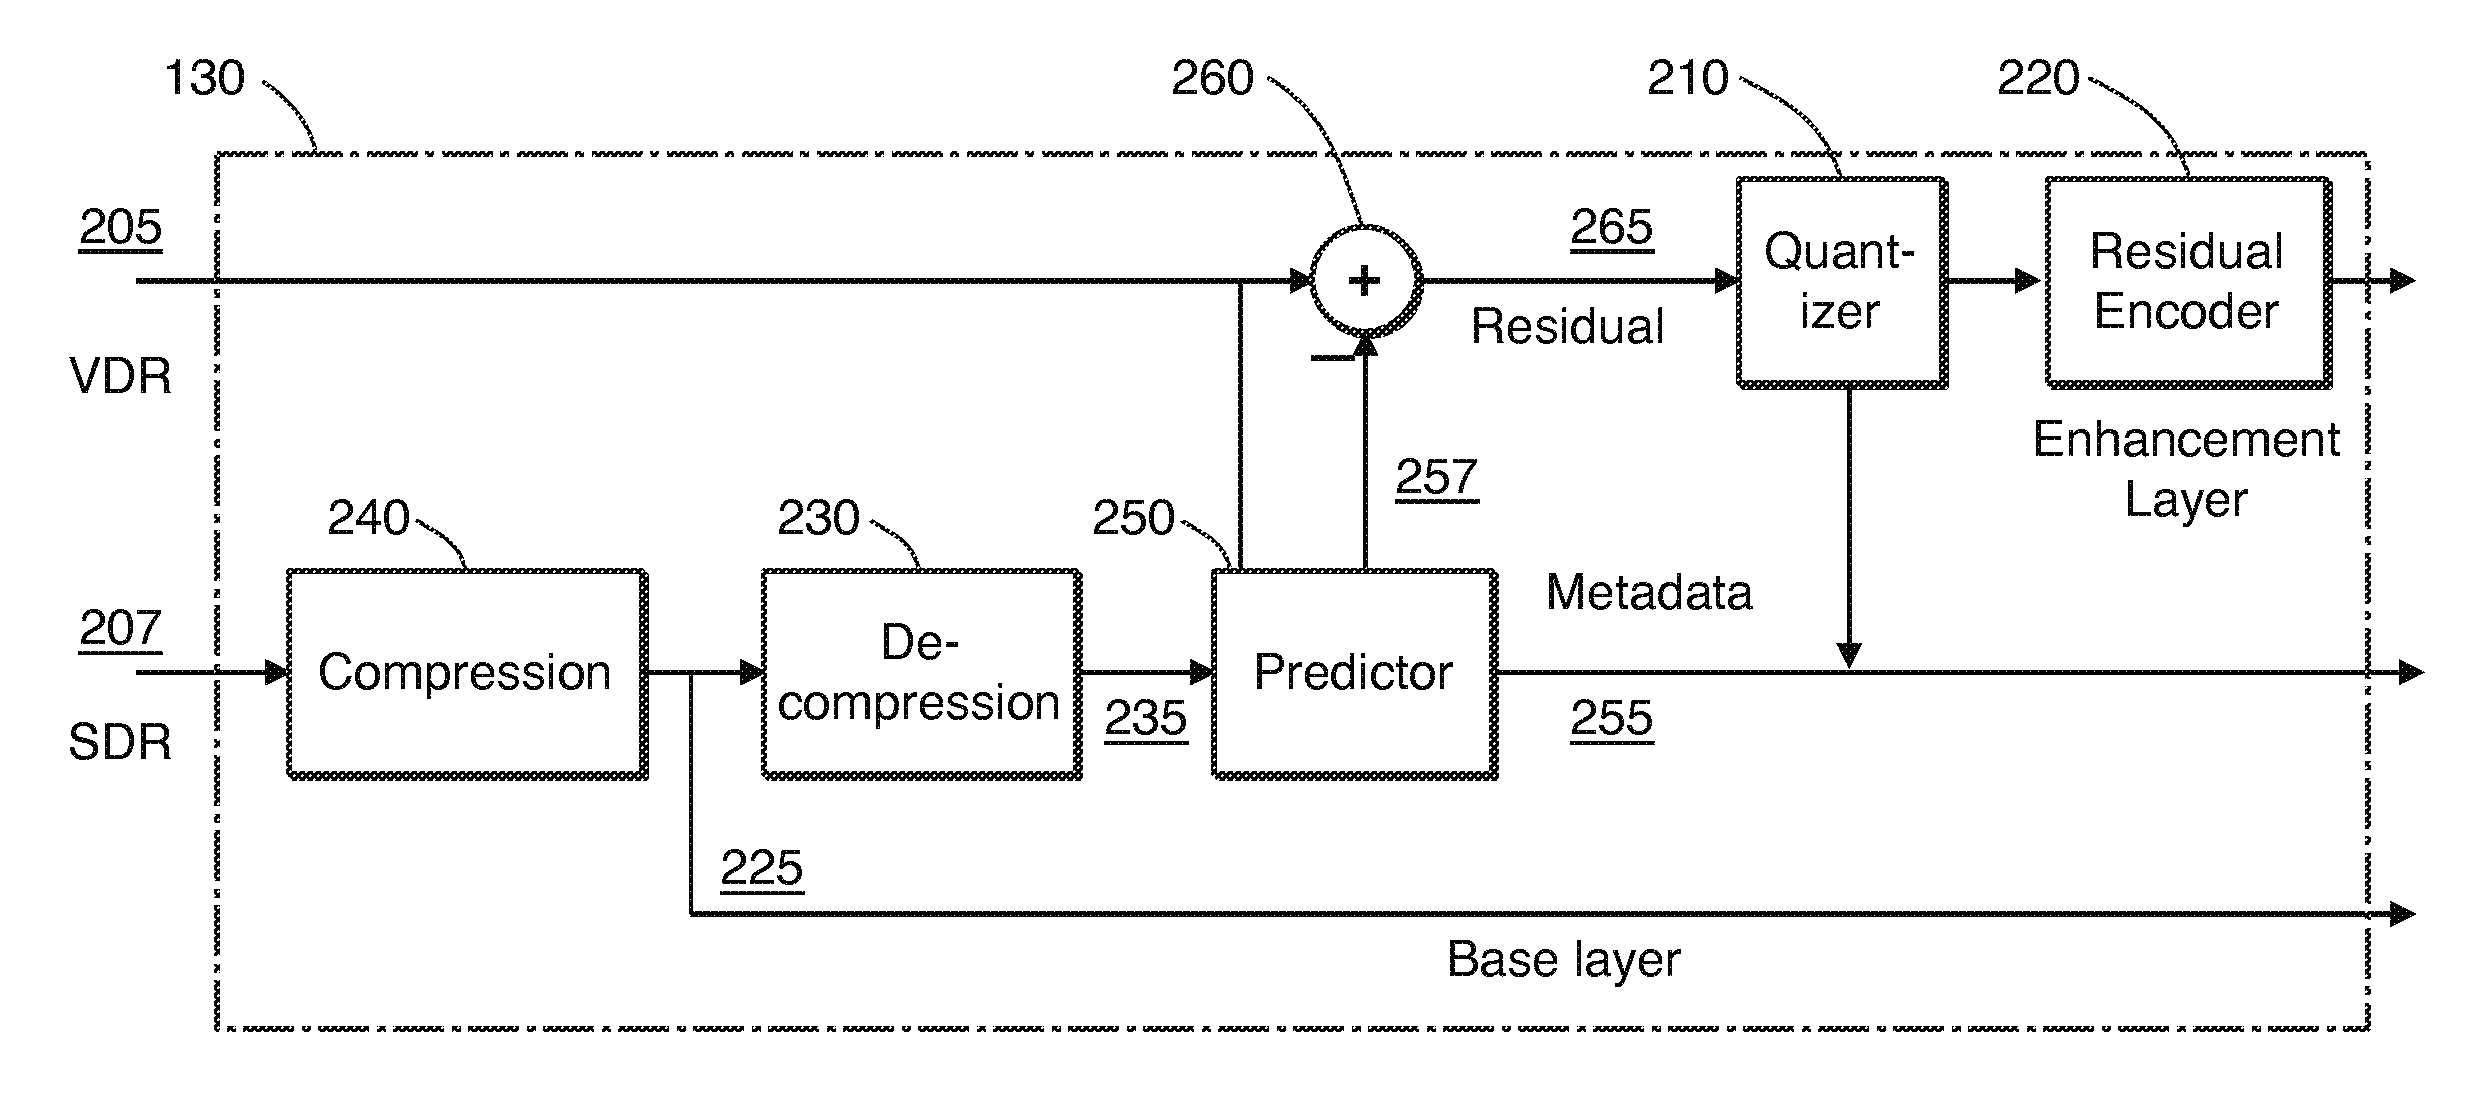 Non-linear VDR residual quantizer